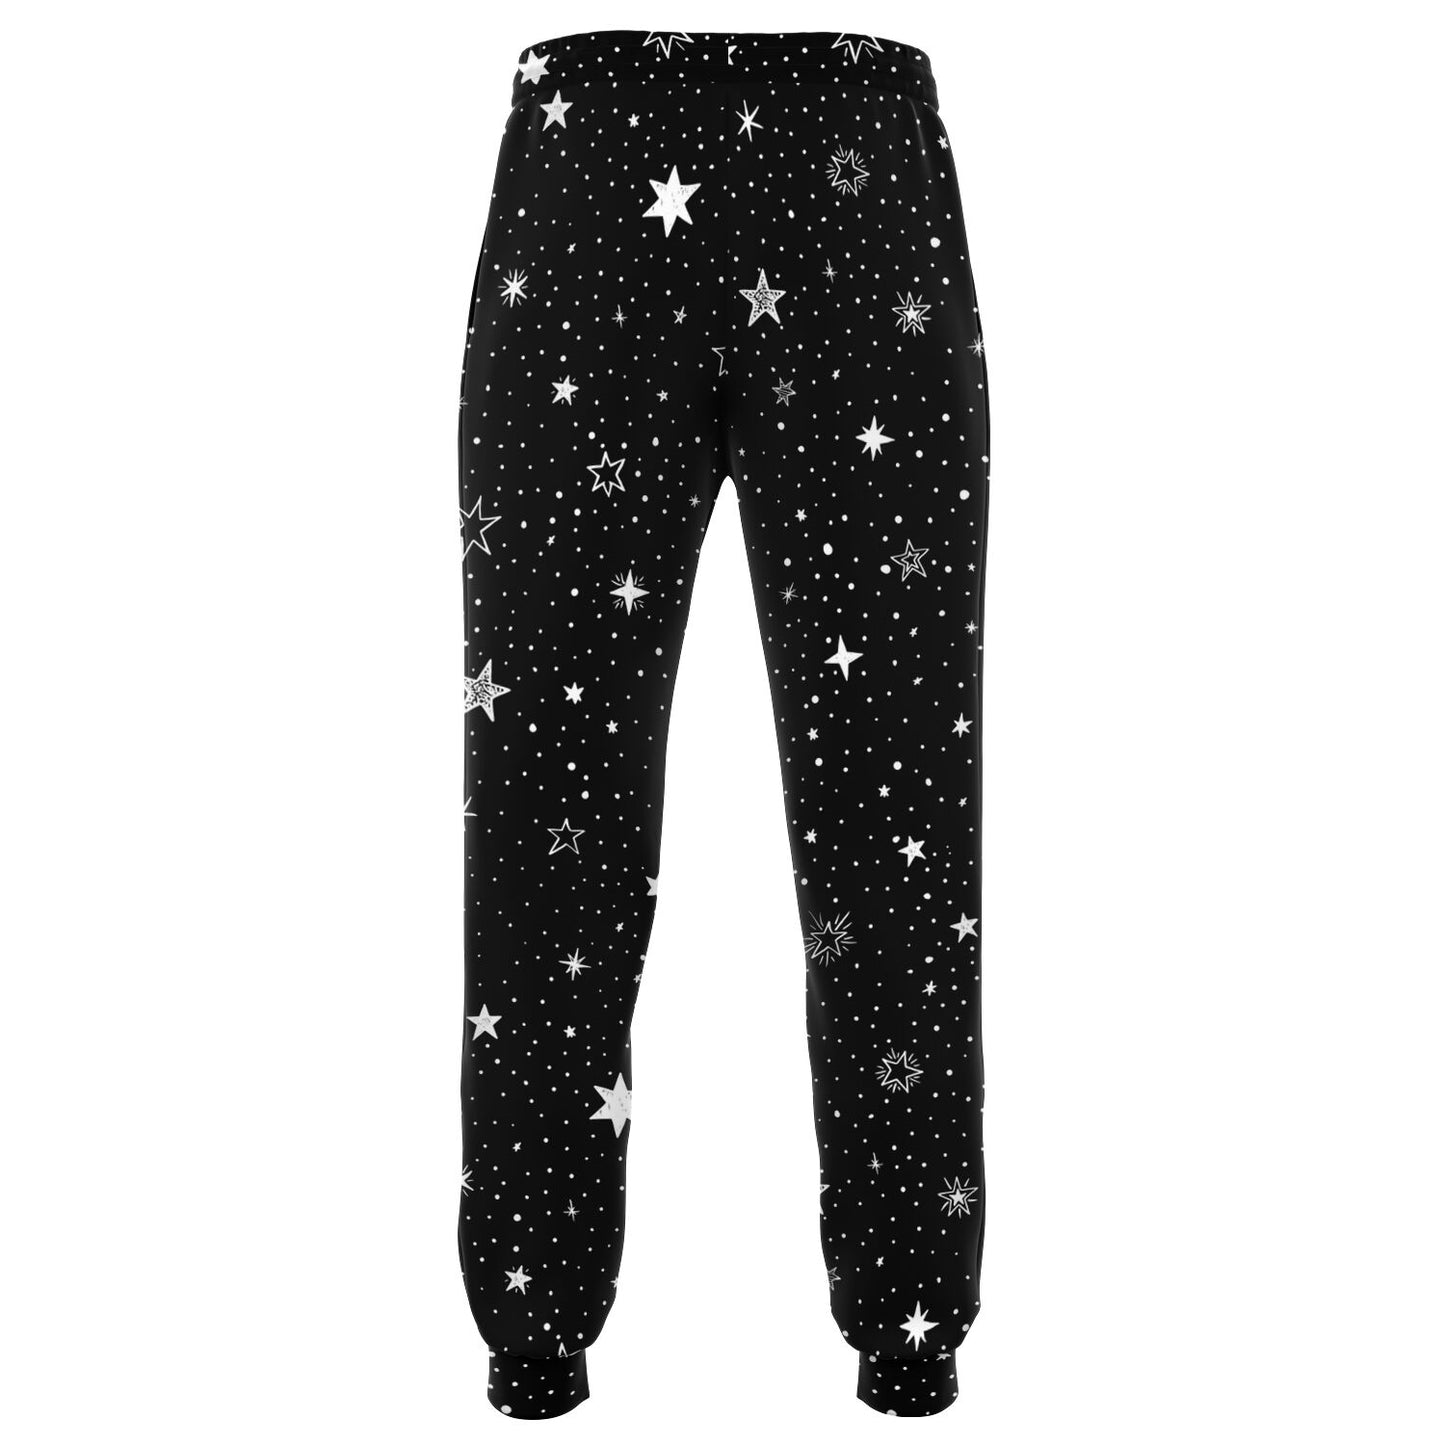 Stars Joggers Sweatpants with Pockets, Black Space Celestial Women Men Female Ladies Fleece Comfy Sweats Pants Loungewear Bottoms Starcove Fashion